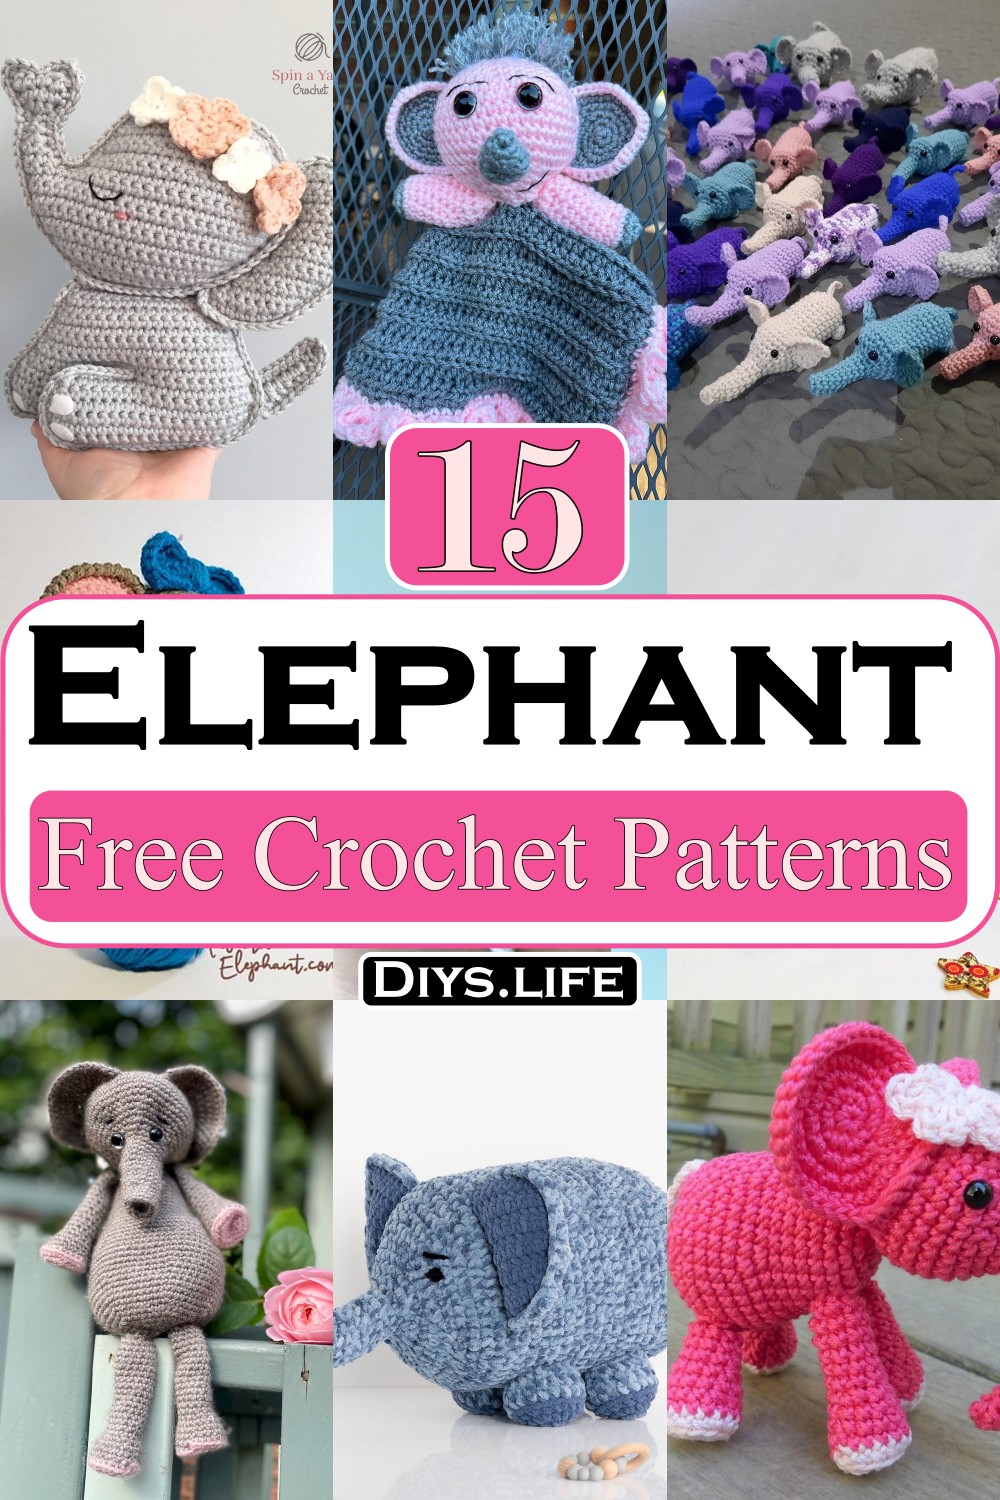 Crochet Elephant Patterns